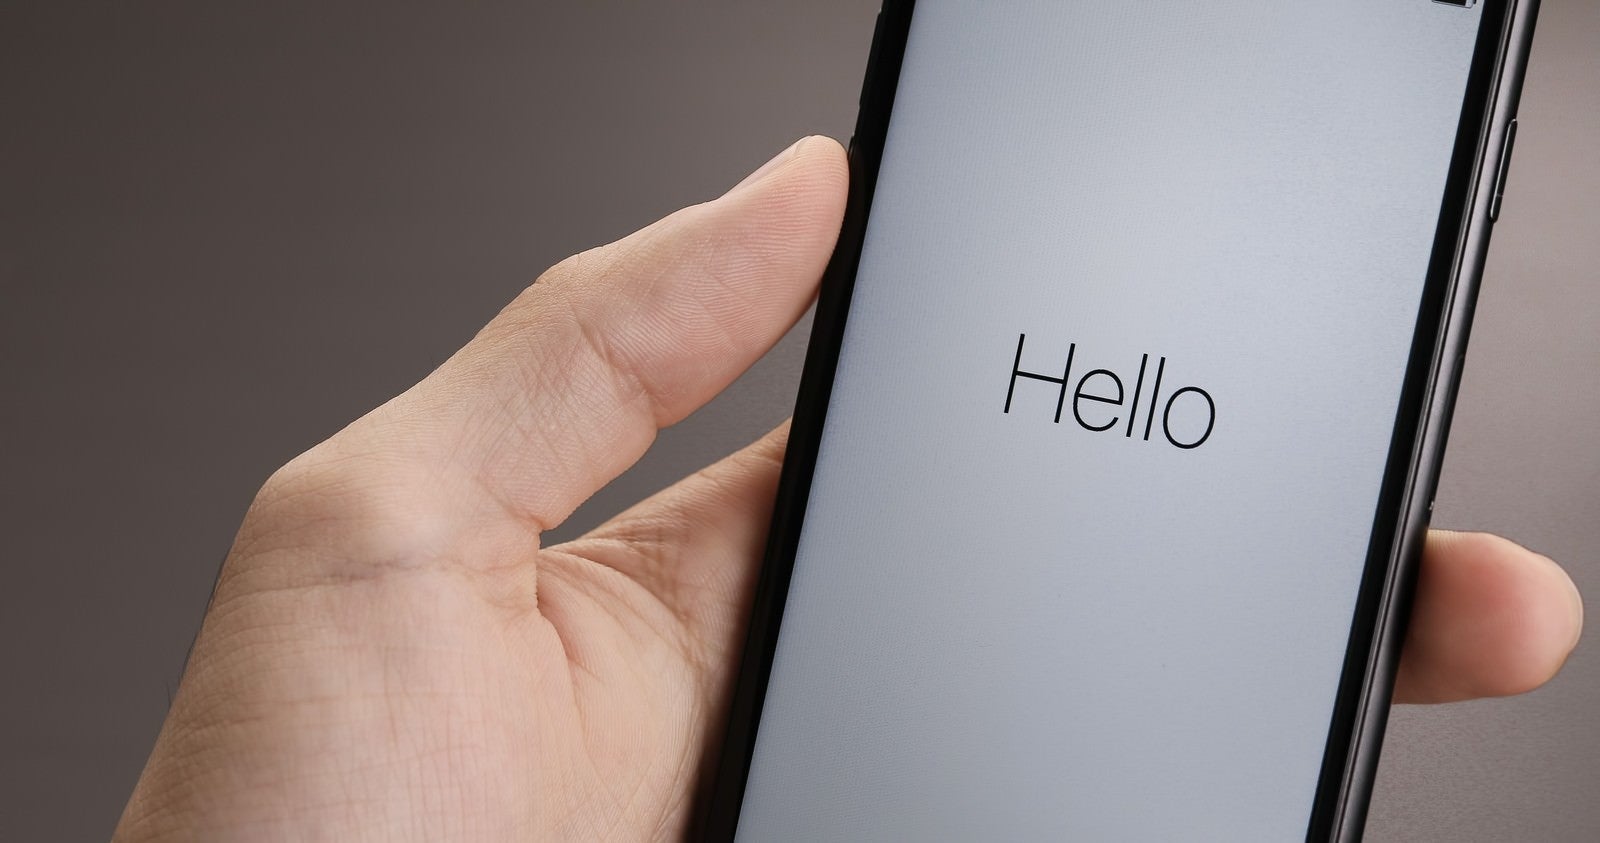 「「Hello」と表示されたスマートフォンの画面」の写真